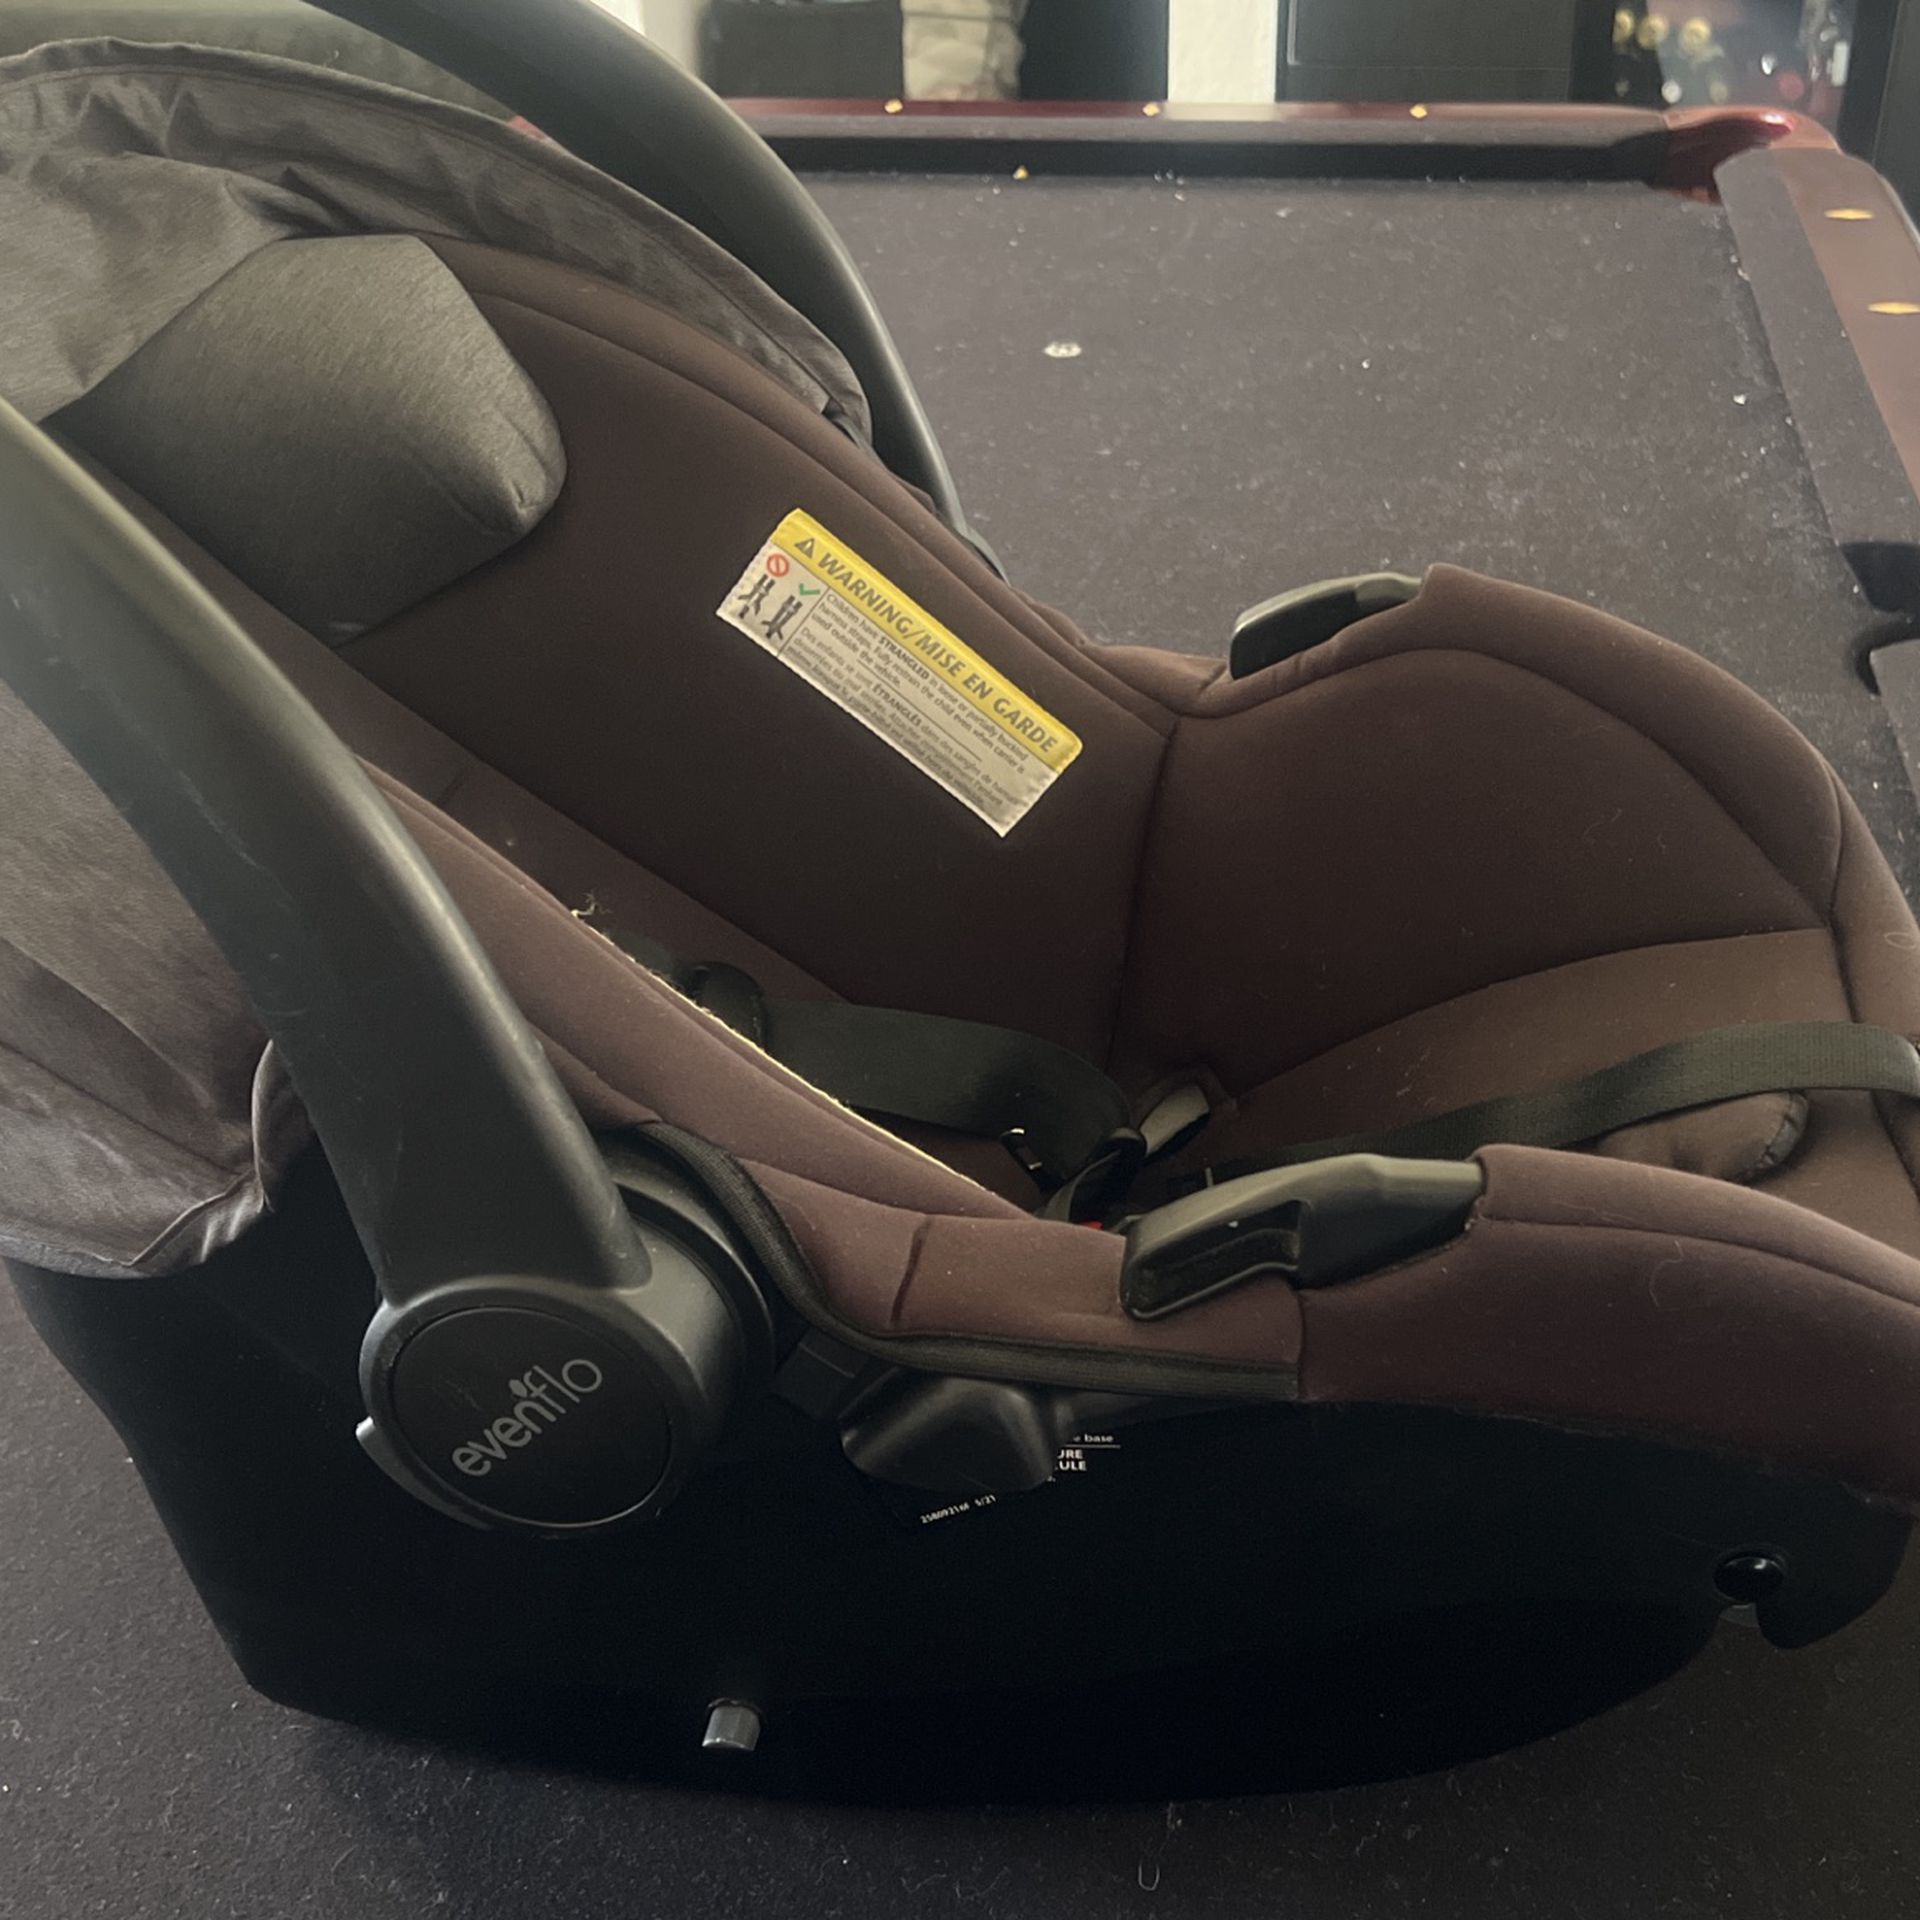 Evenflo infant Car Seat W base